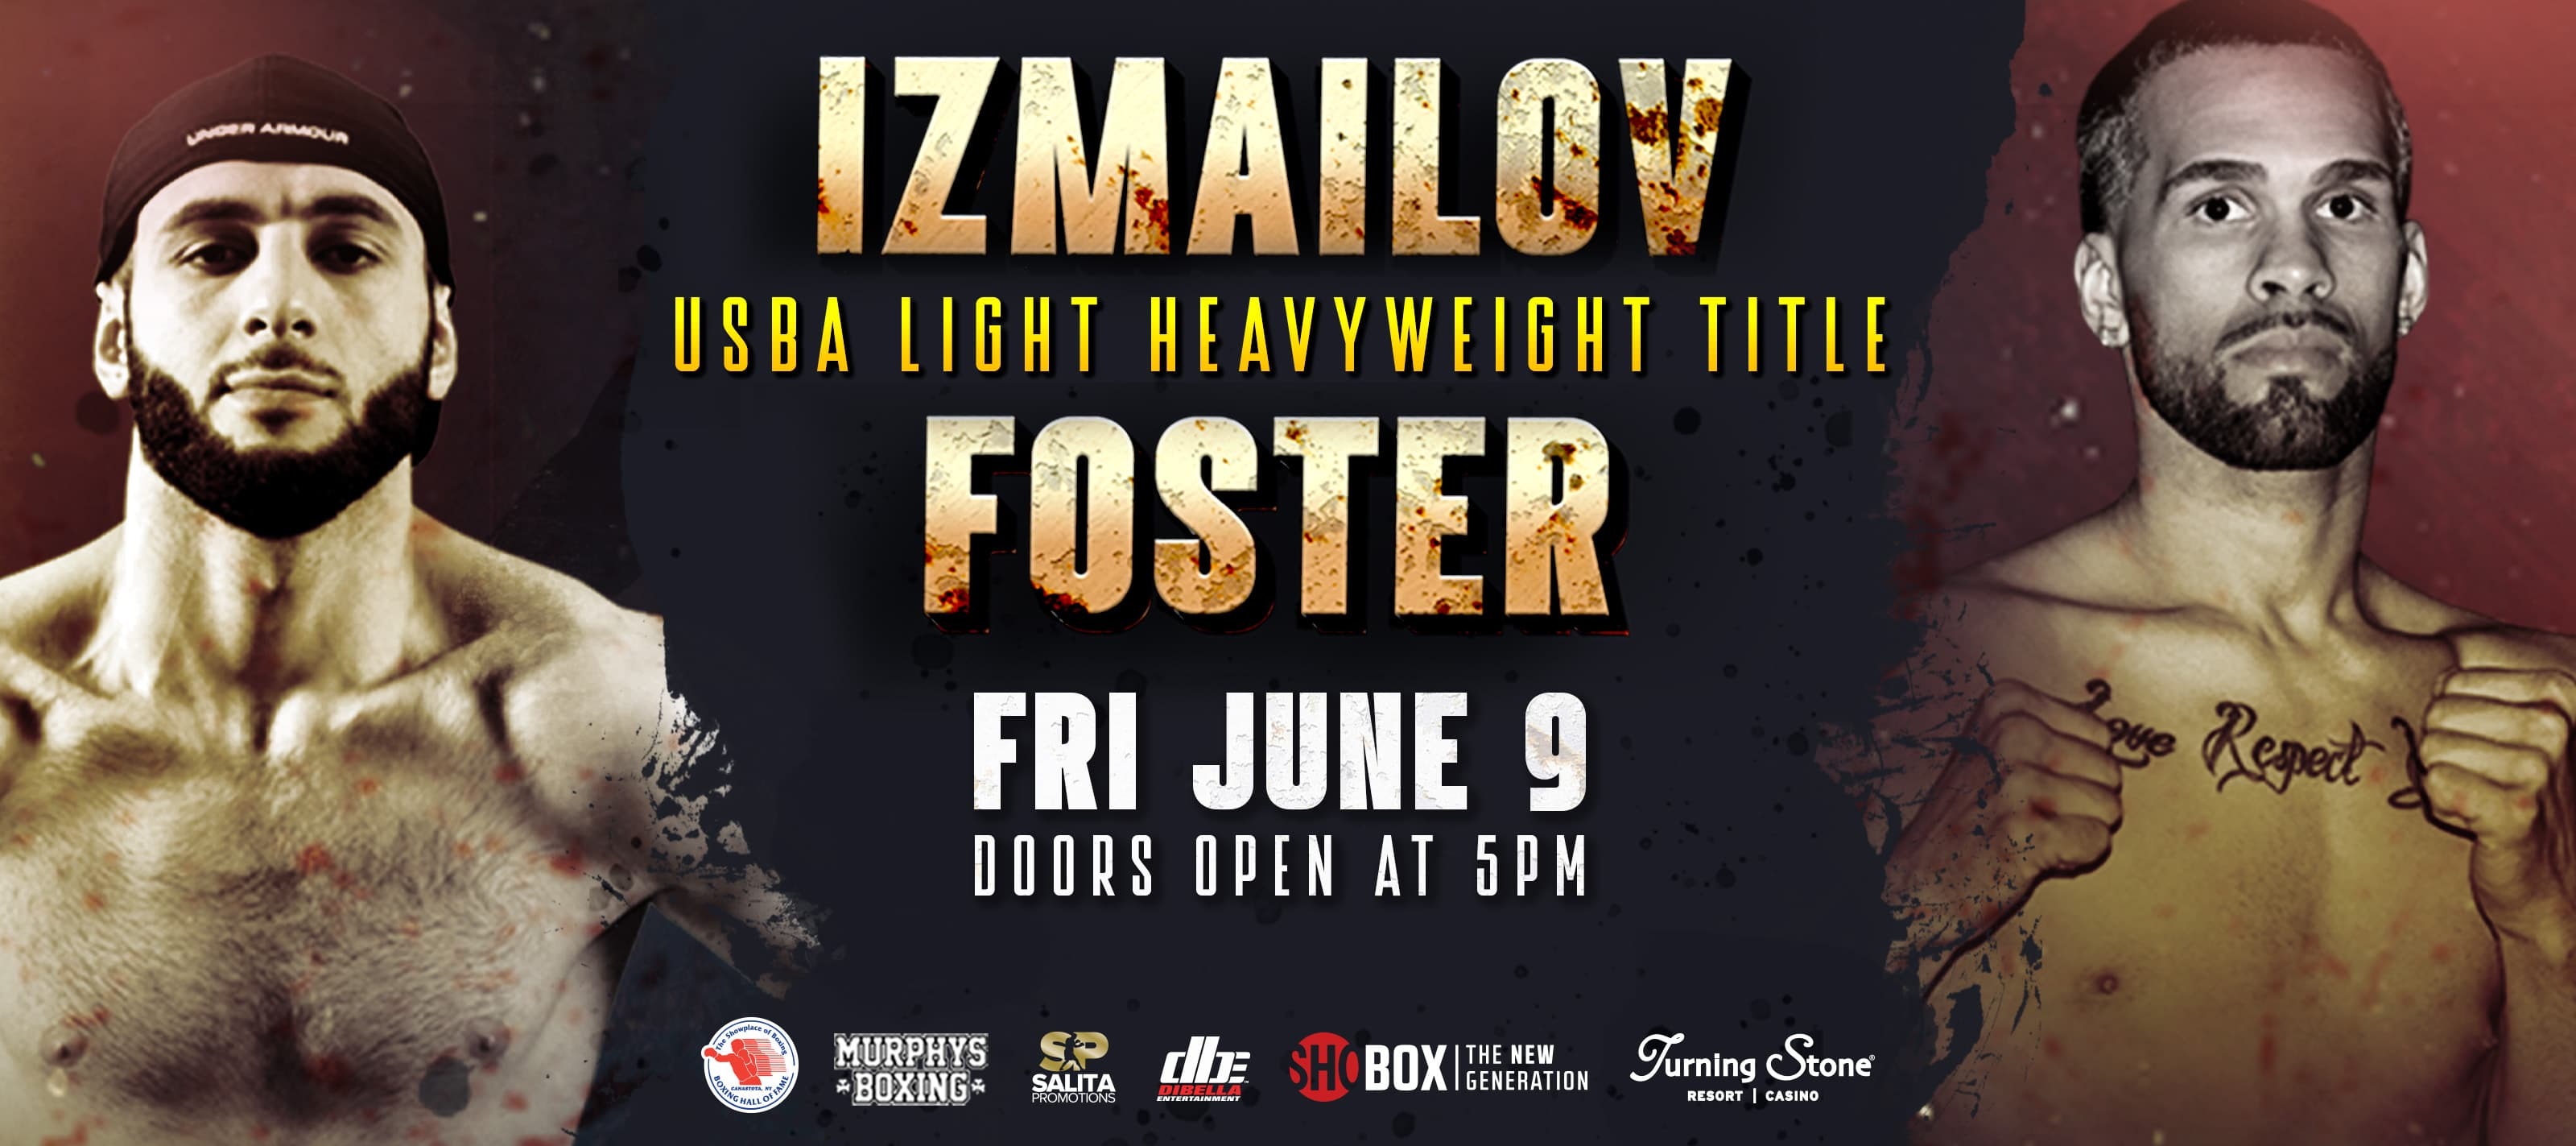 Izmailov vs Foster USBA Light Heavyweight Title Fri June 9 doors open at 5pm